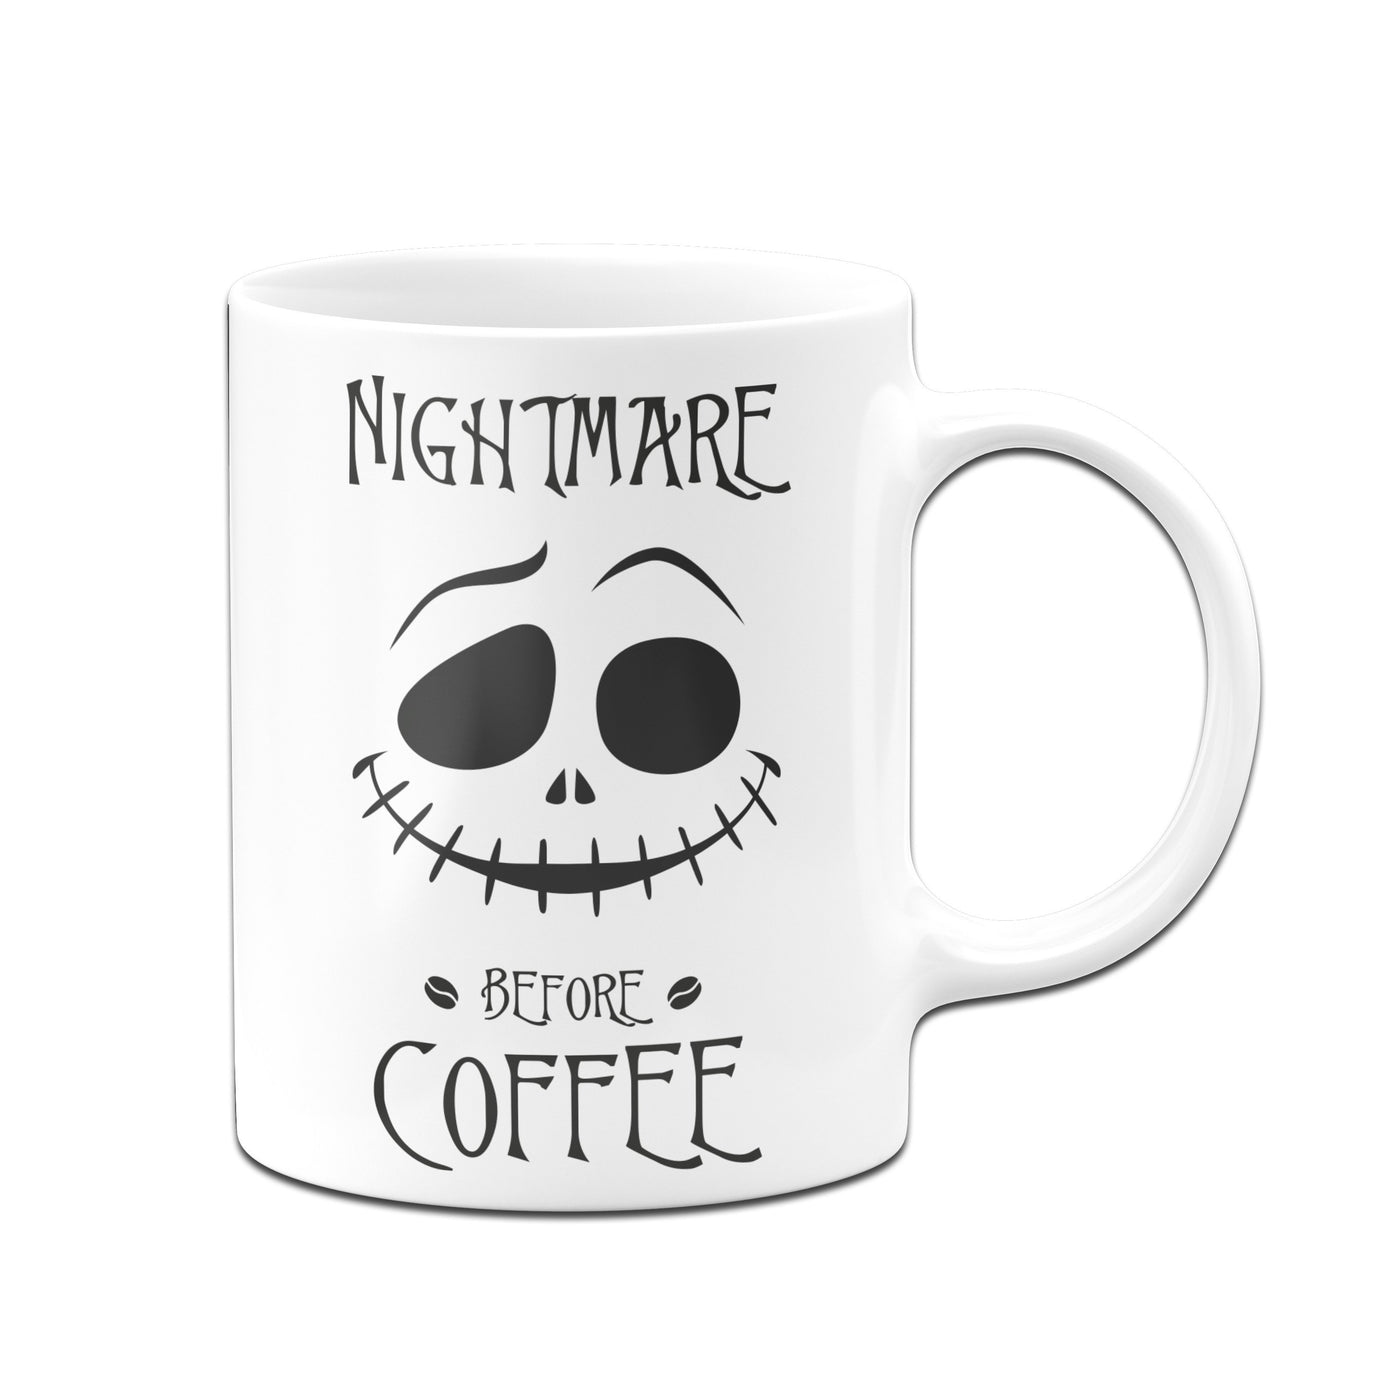 Bild: Tasse - Nightmare before coffee Geschenkidee